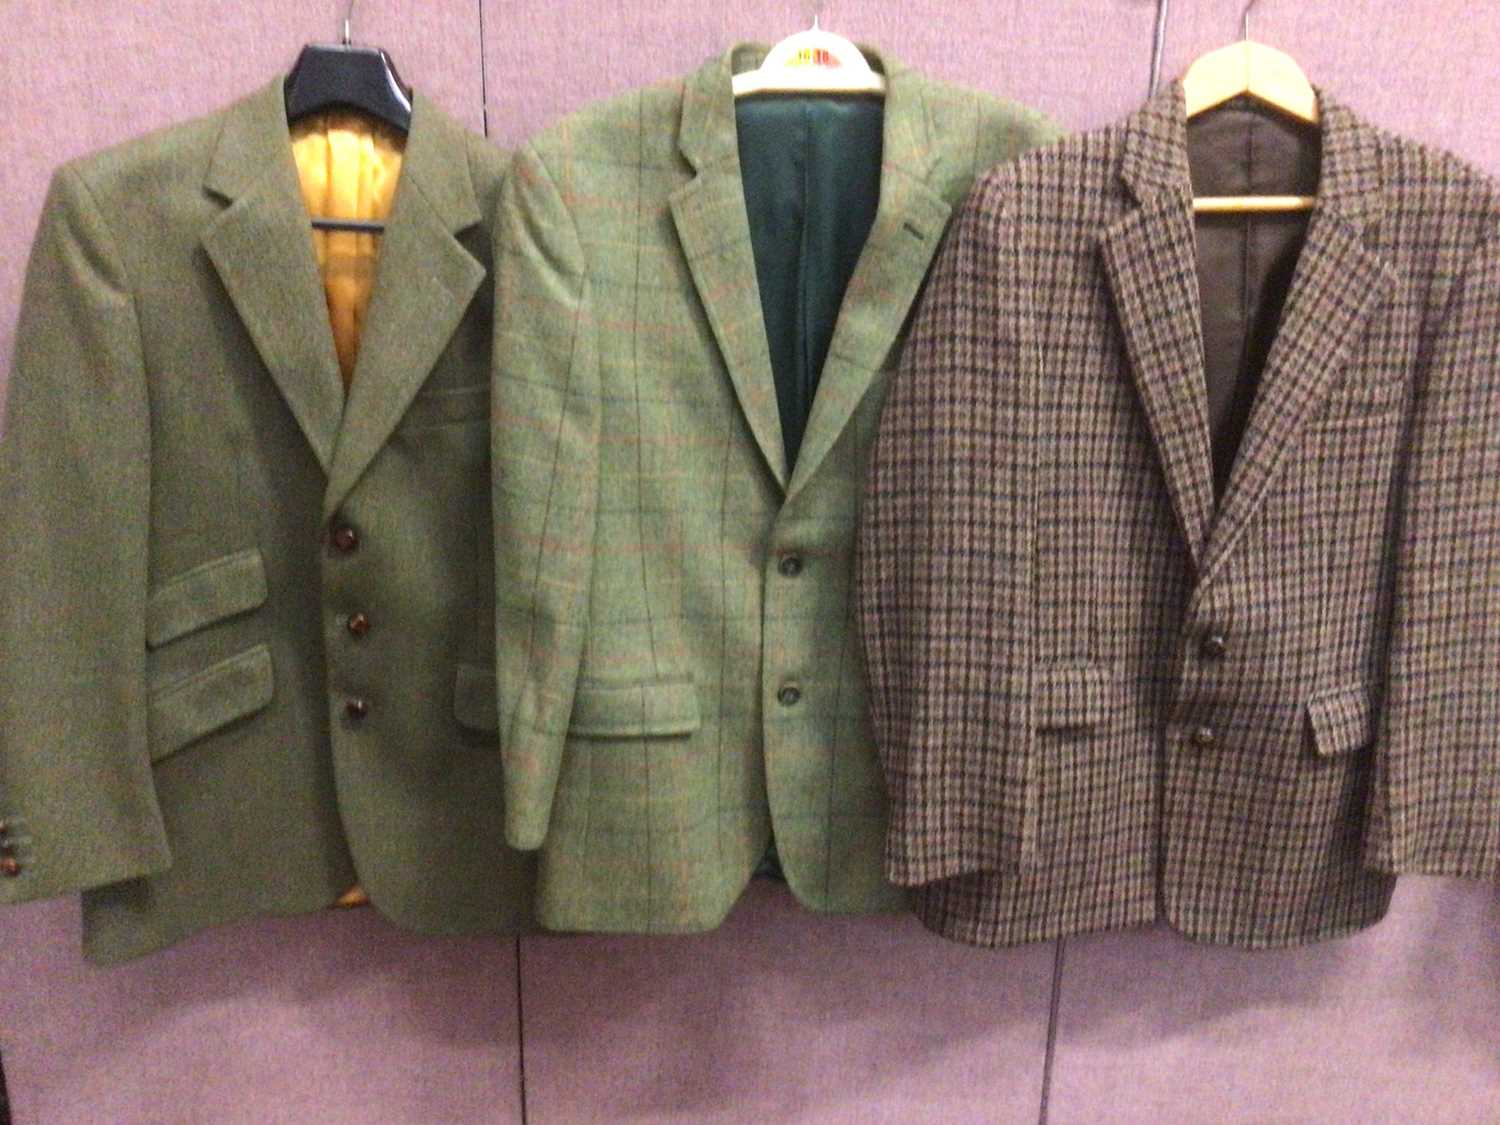 Gentlemen's wool tweed jackets makes include The Highlands, Santinelli Shetland, Andre Balzac Tweedl